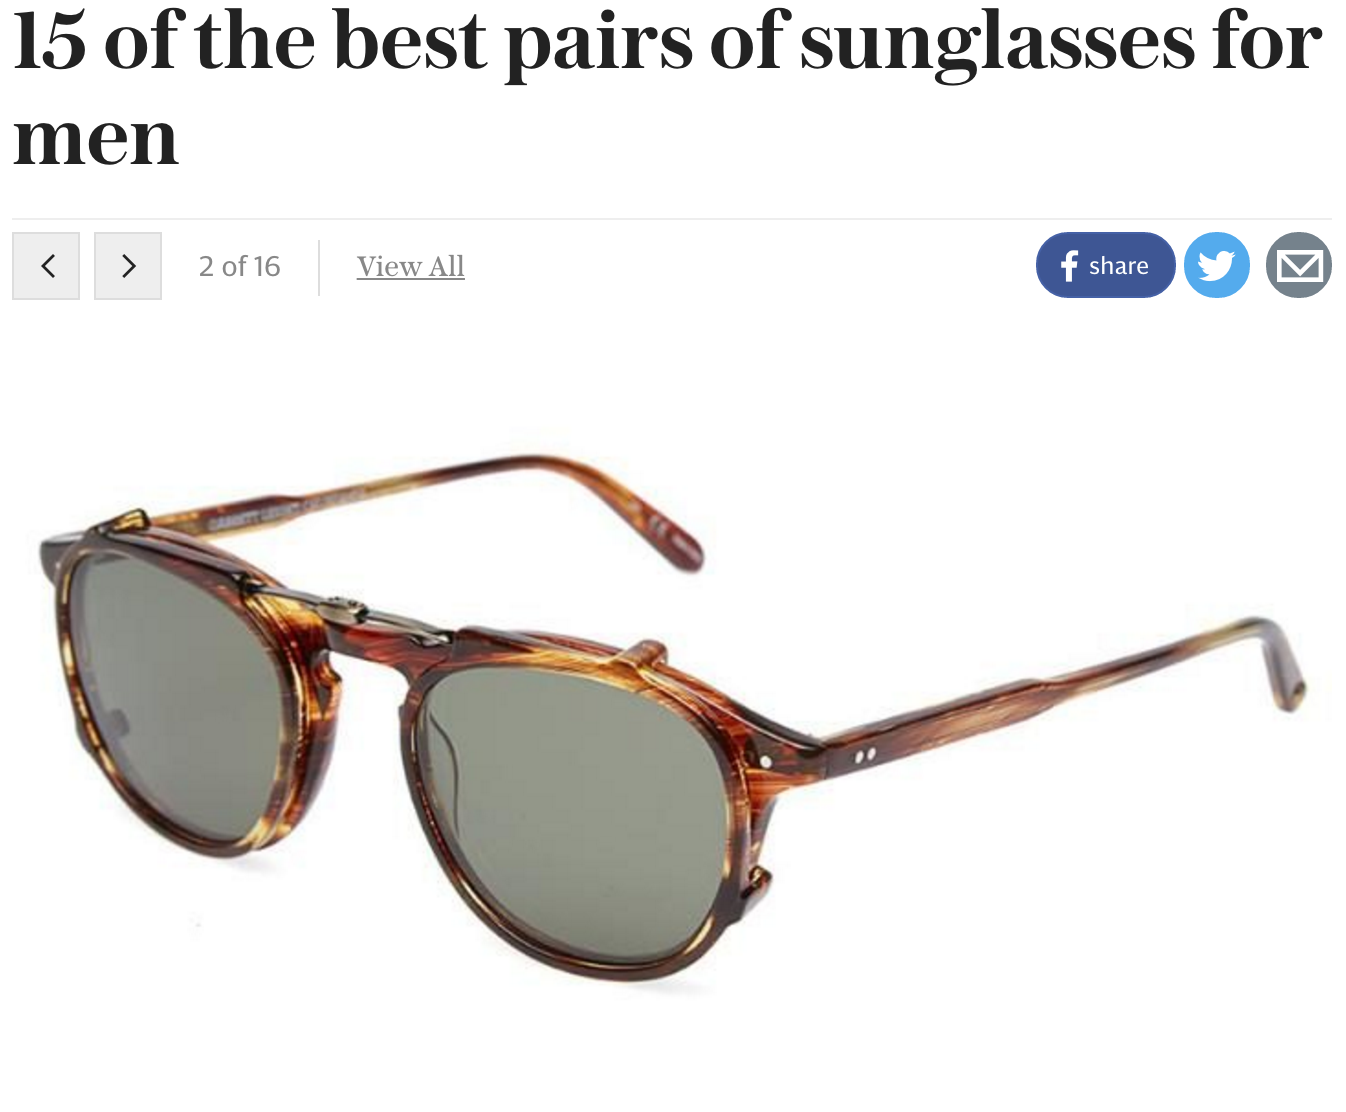 telegraph-15-best-sunglasses-hallam